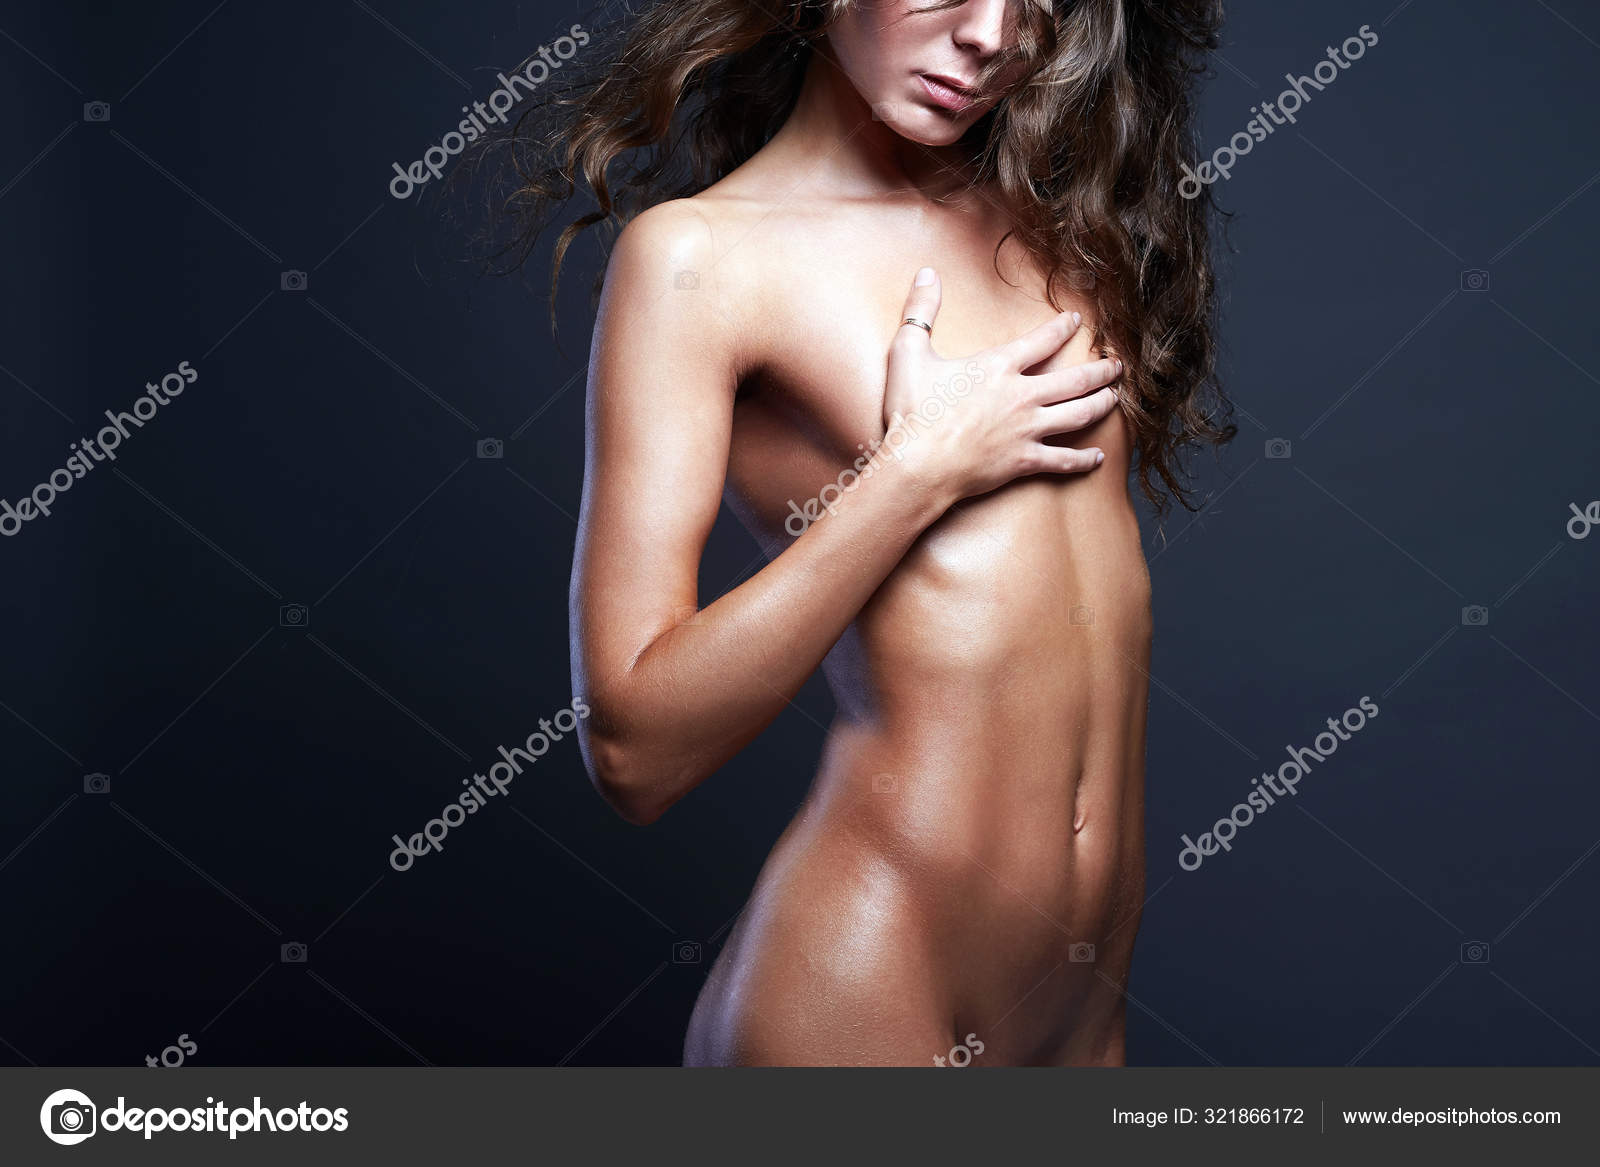 Sexy beautiful woman nude